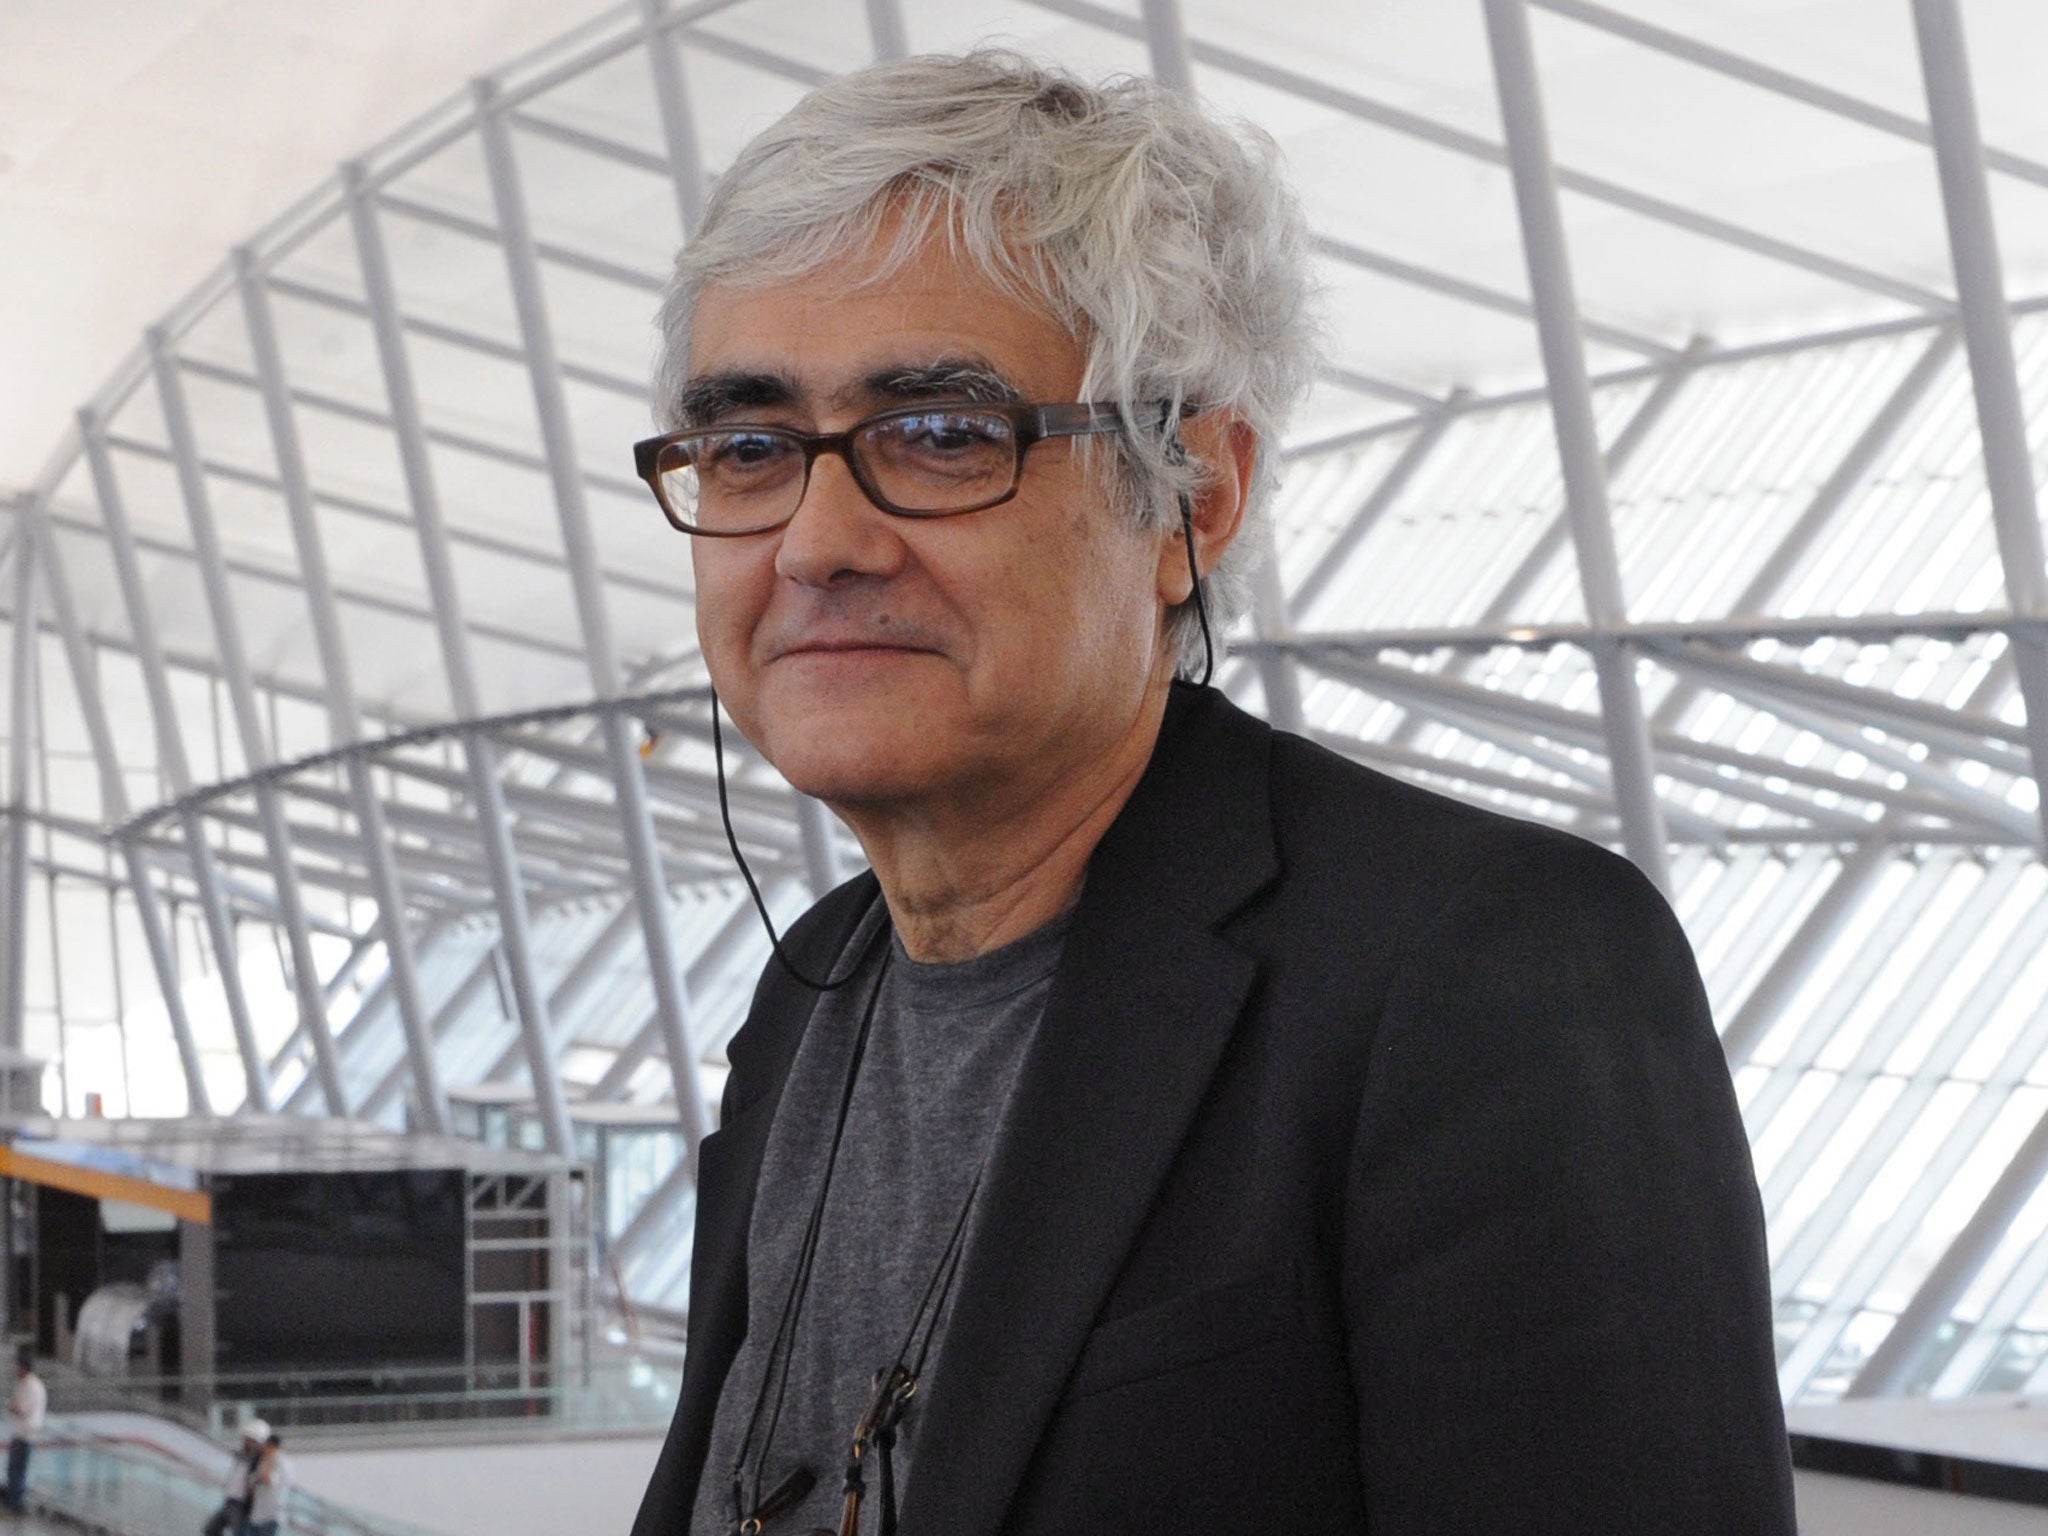 Rafael Vinoly, architect of the 'walkie talkie' building